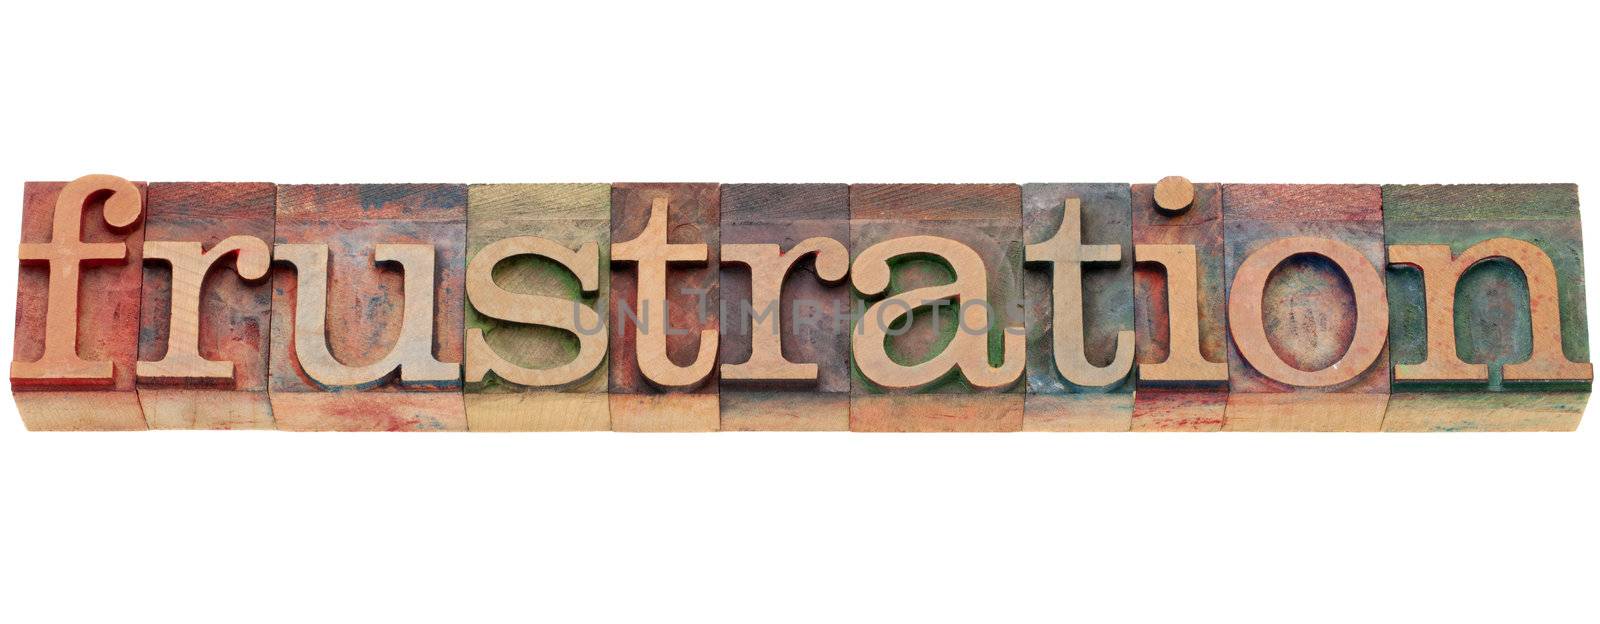 frustration - isolated word in vintage wood letterpress printing blocks